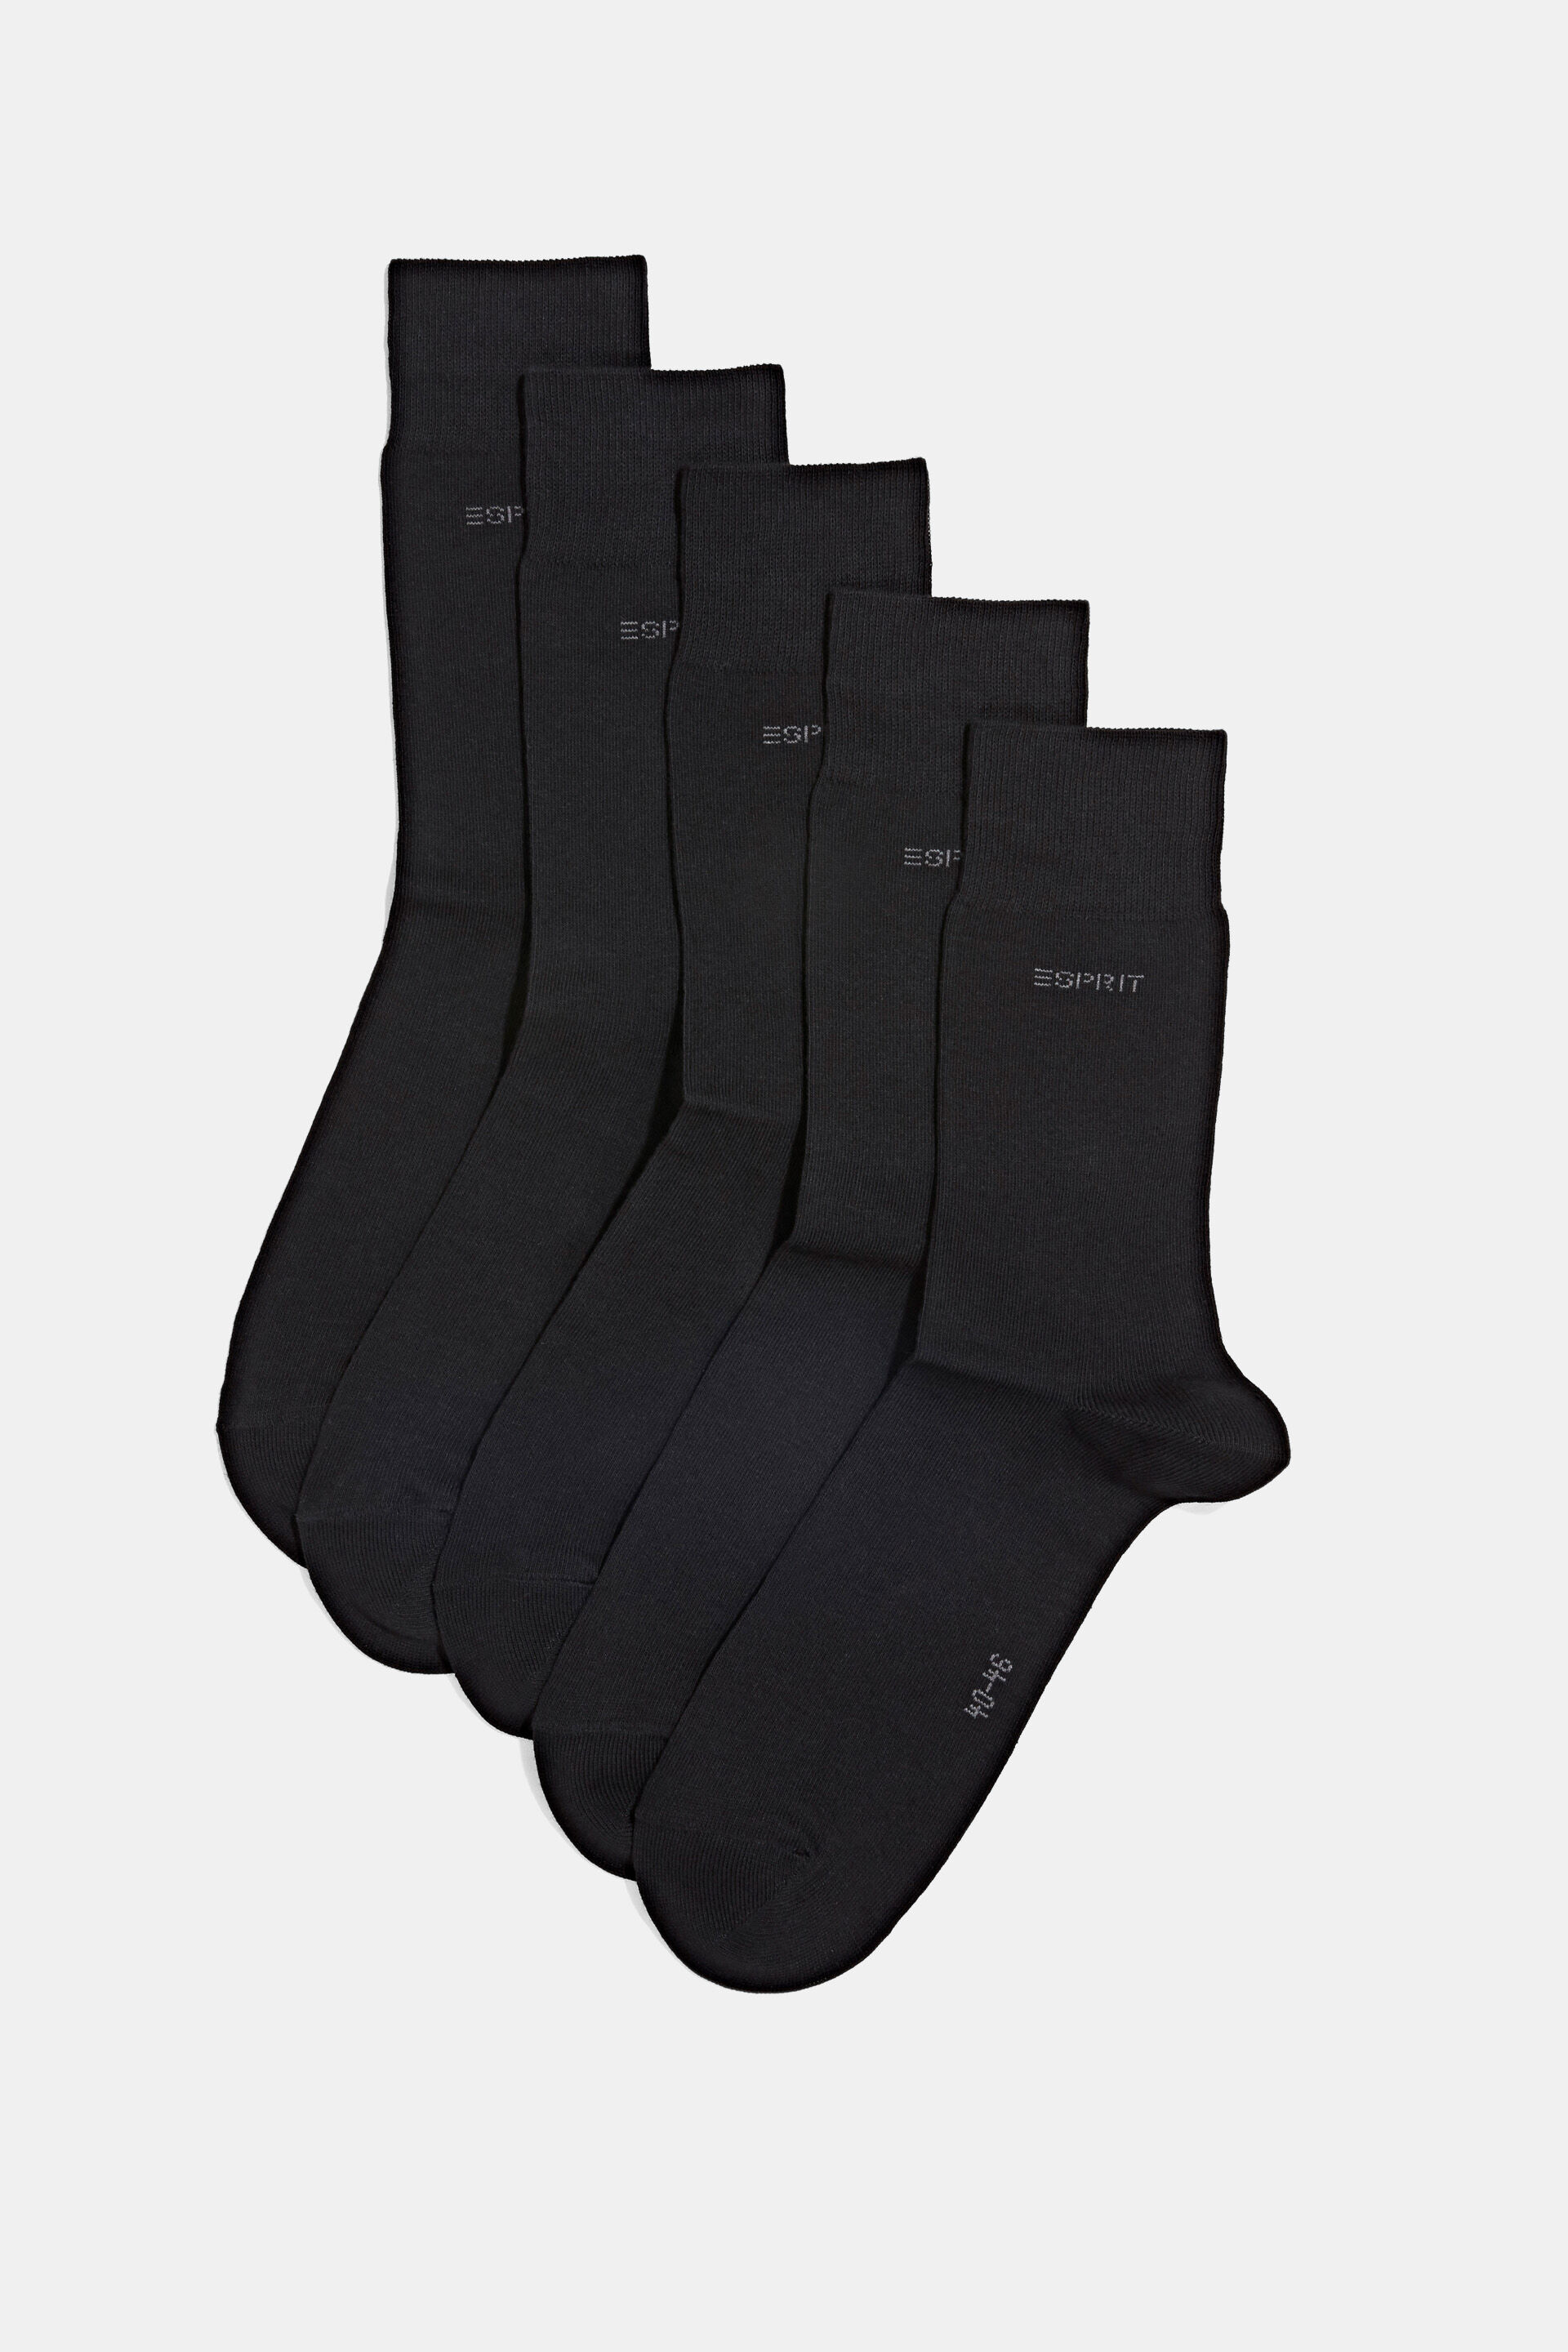 Esprit organic cotton of Pack socks, 5 blended